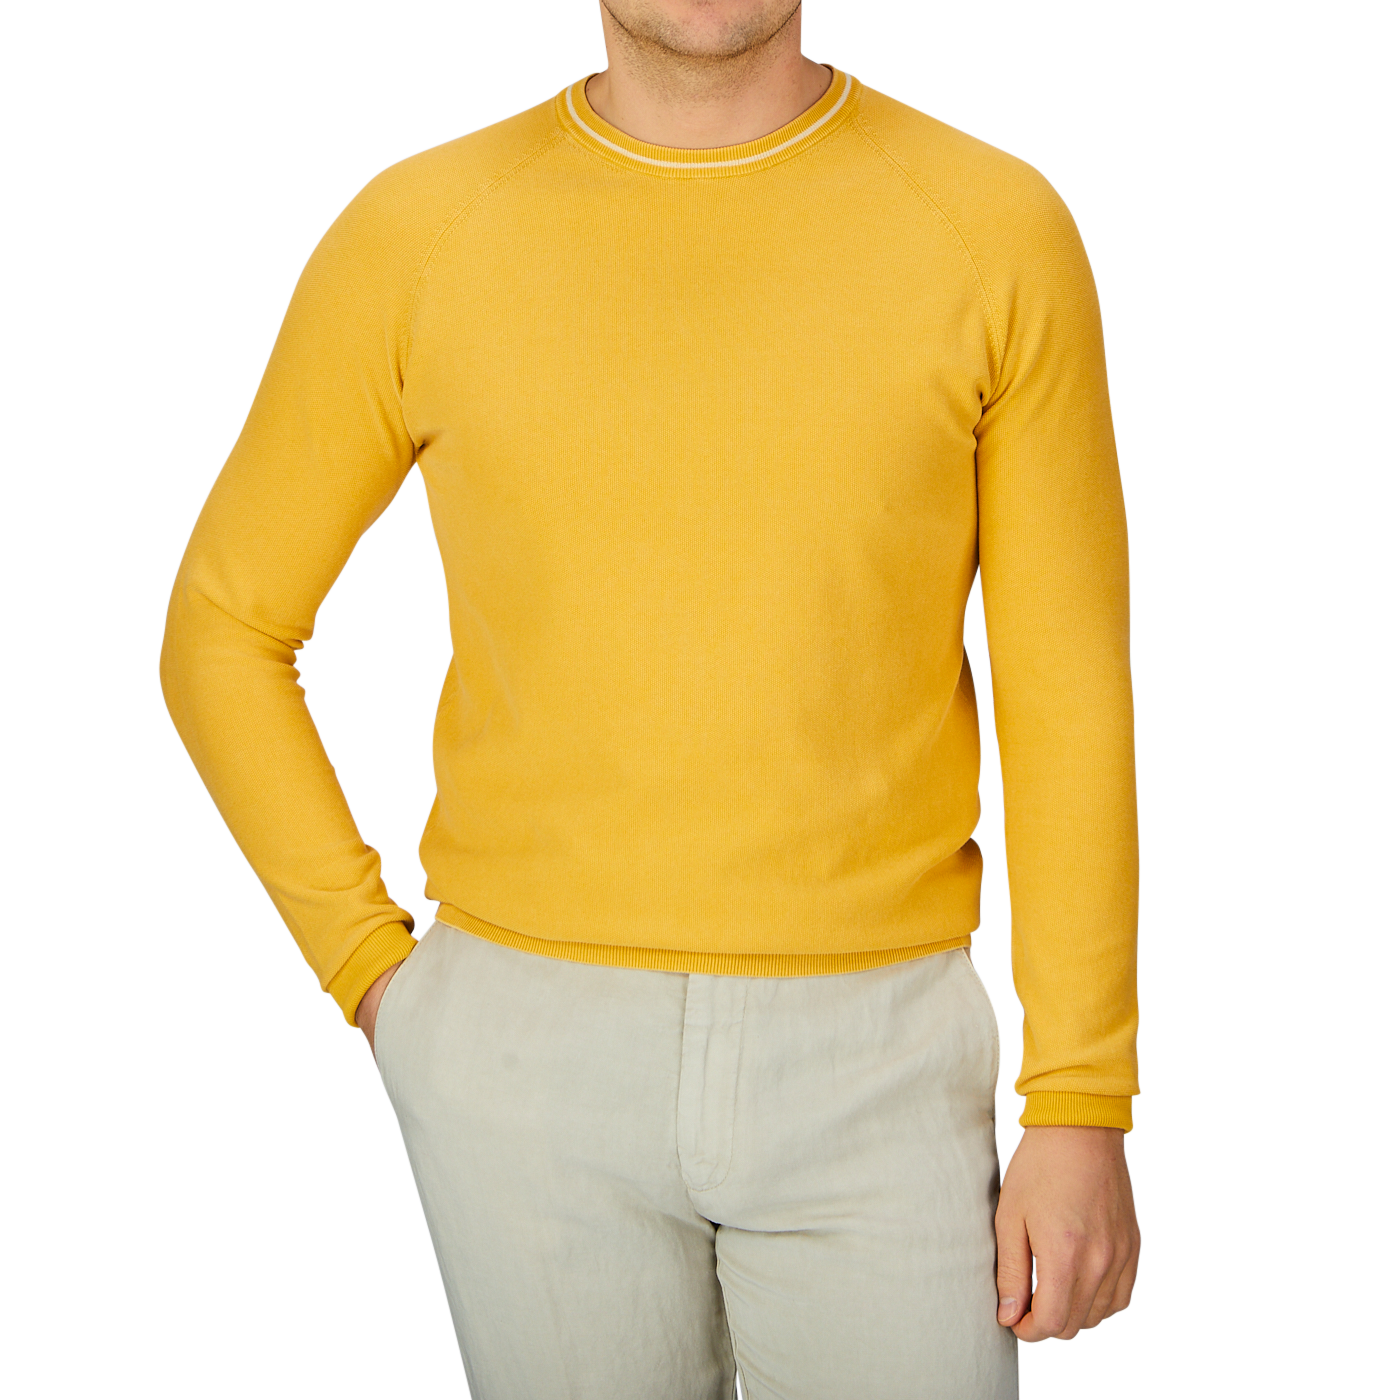 A man wearing a Bright Yellow Cotton Piquet Crew Neck Sweater by Aspesi and khaki pants.